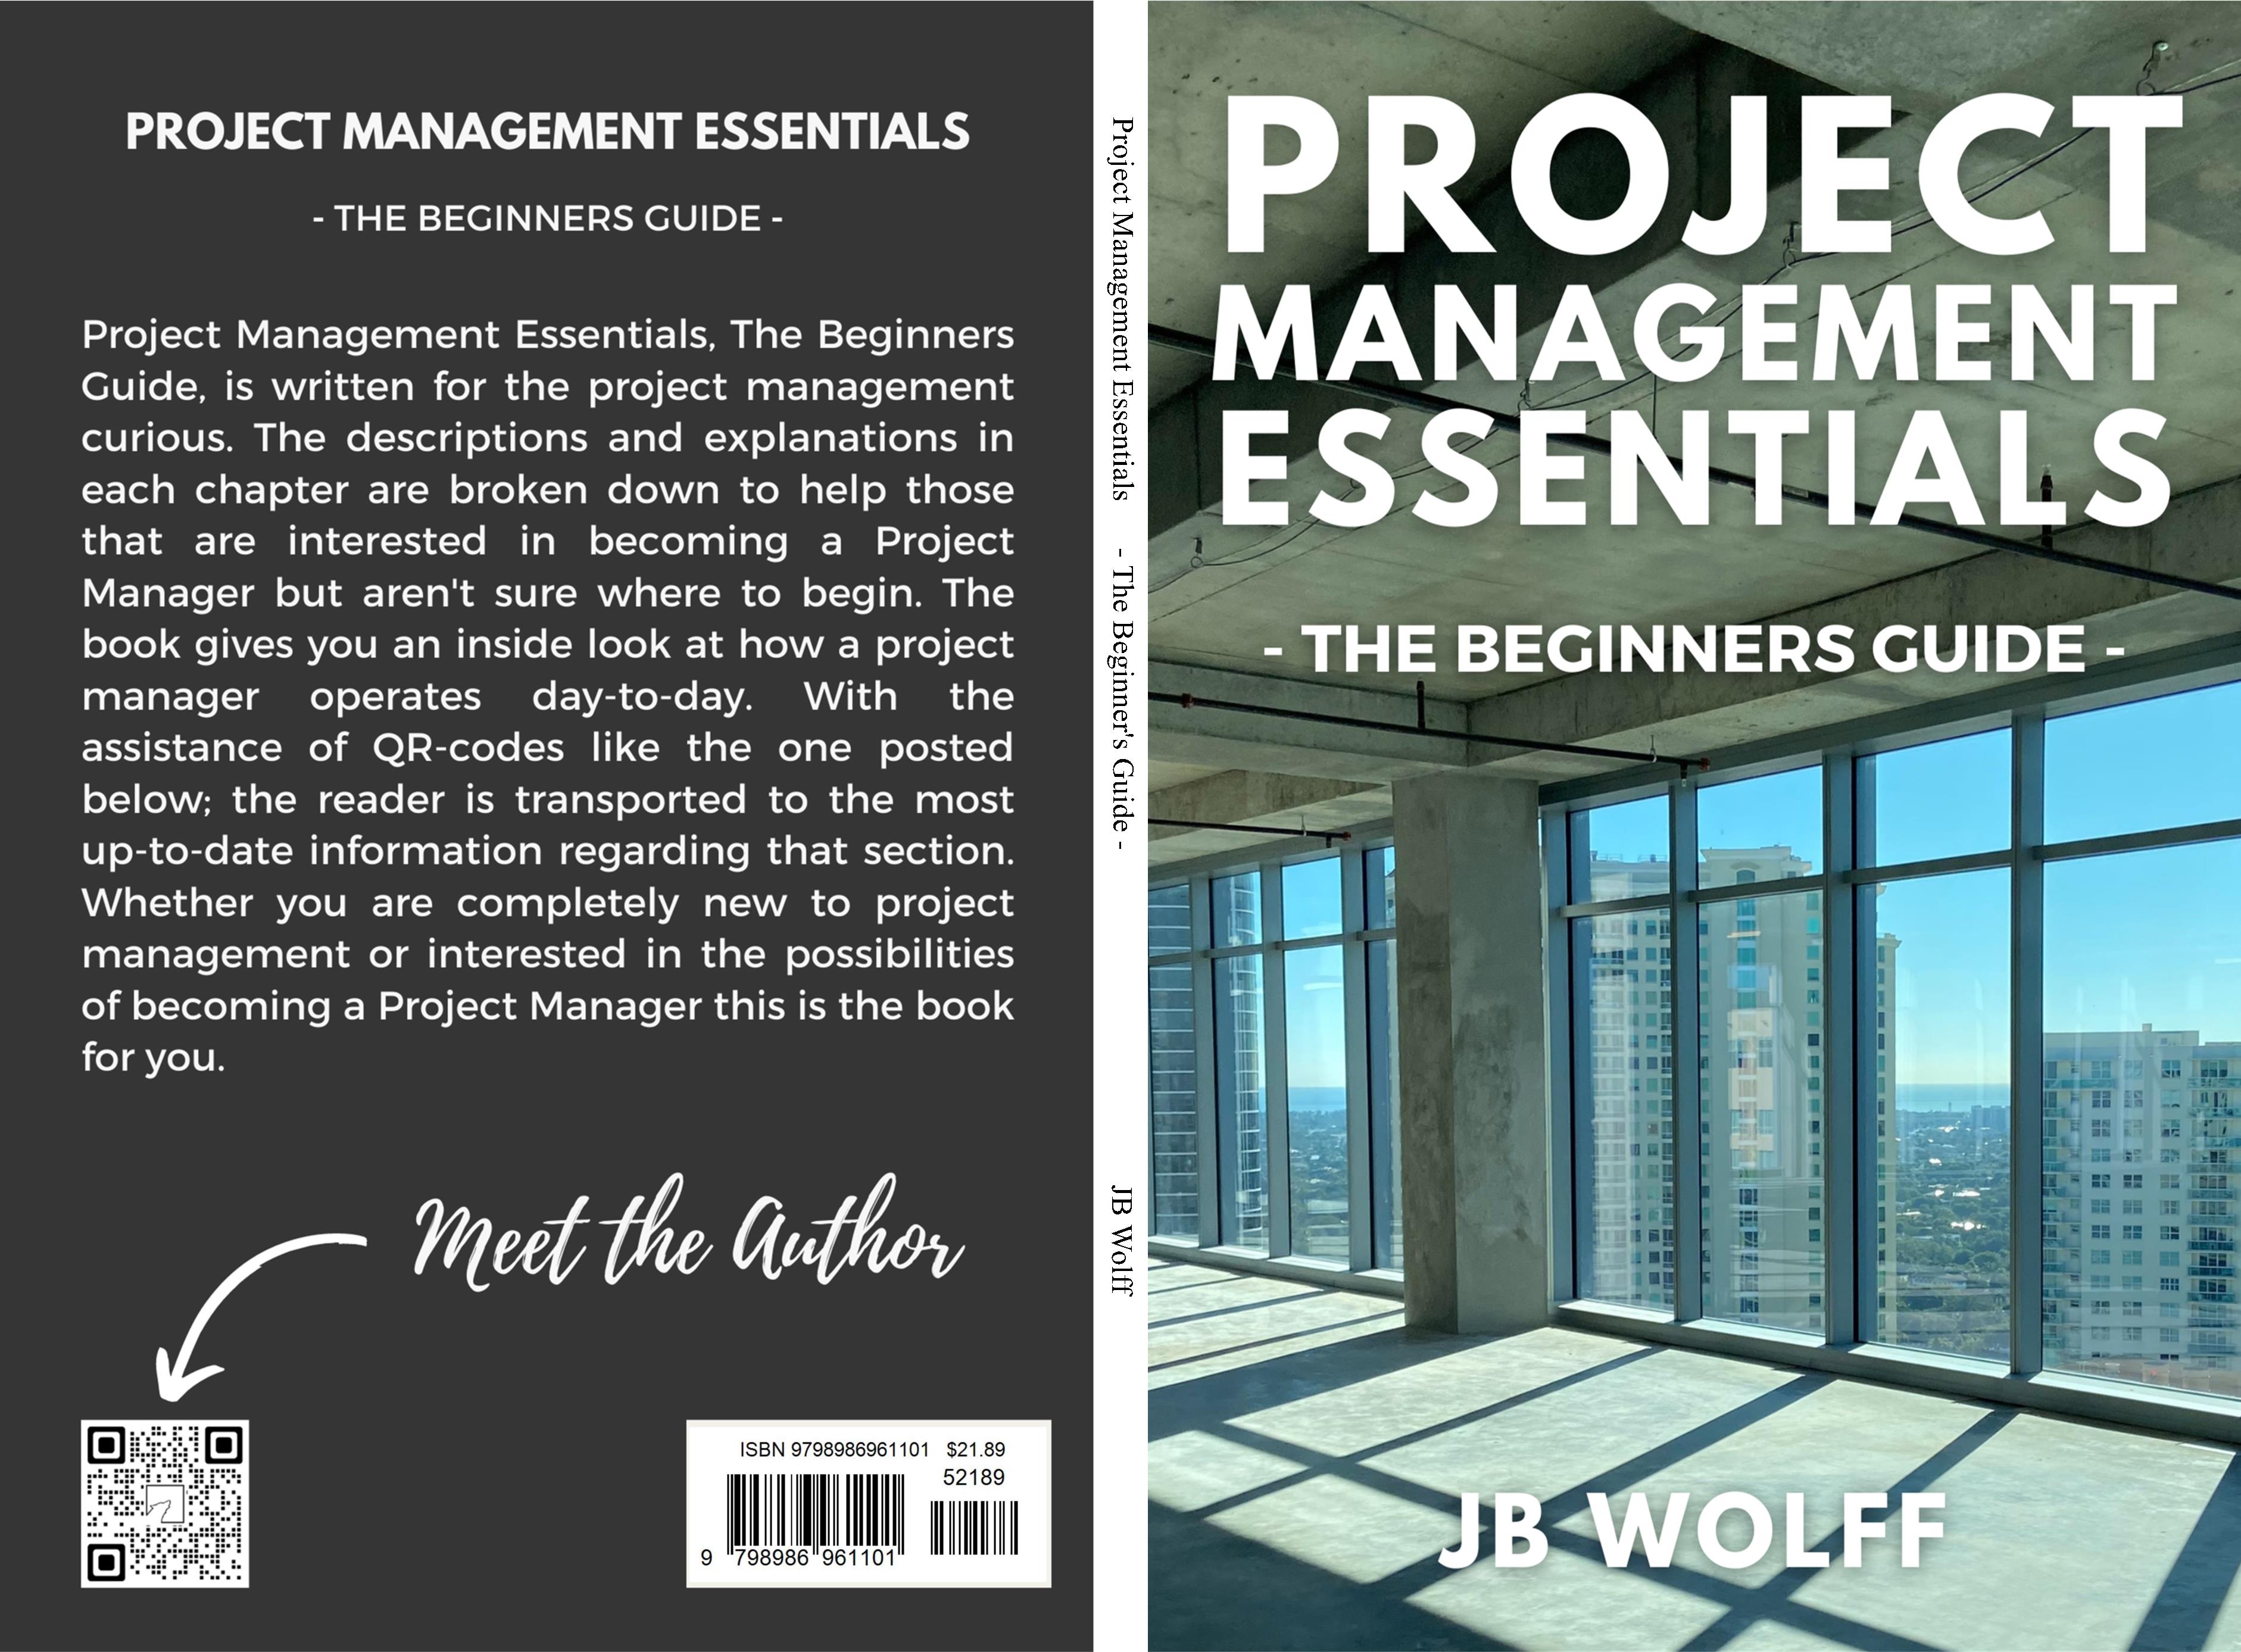 Project Management Essentials, The Beginner